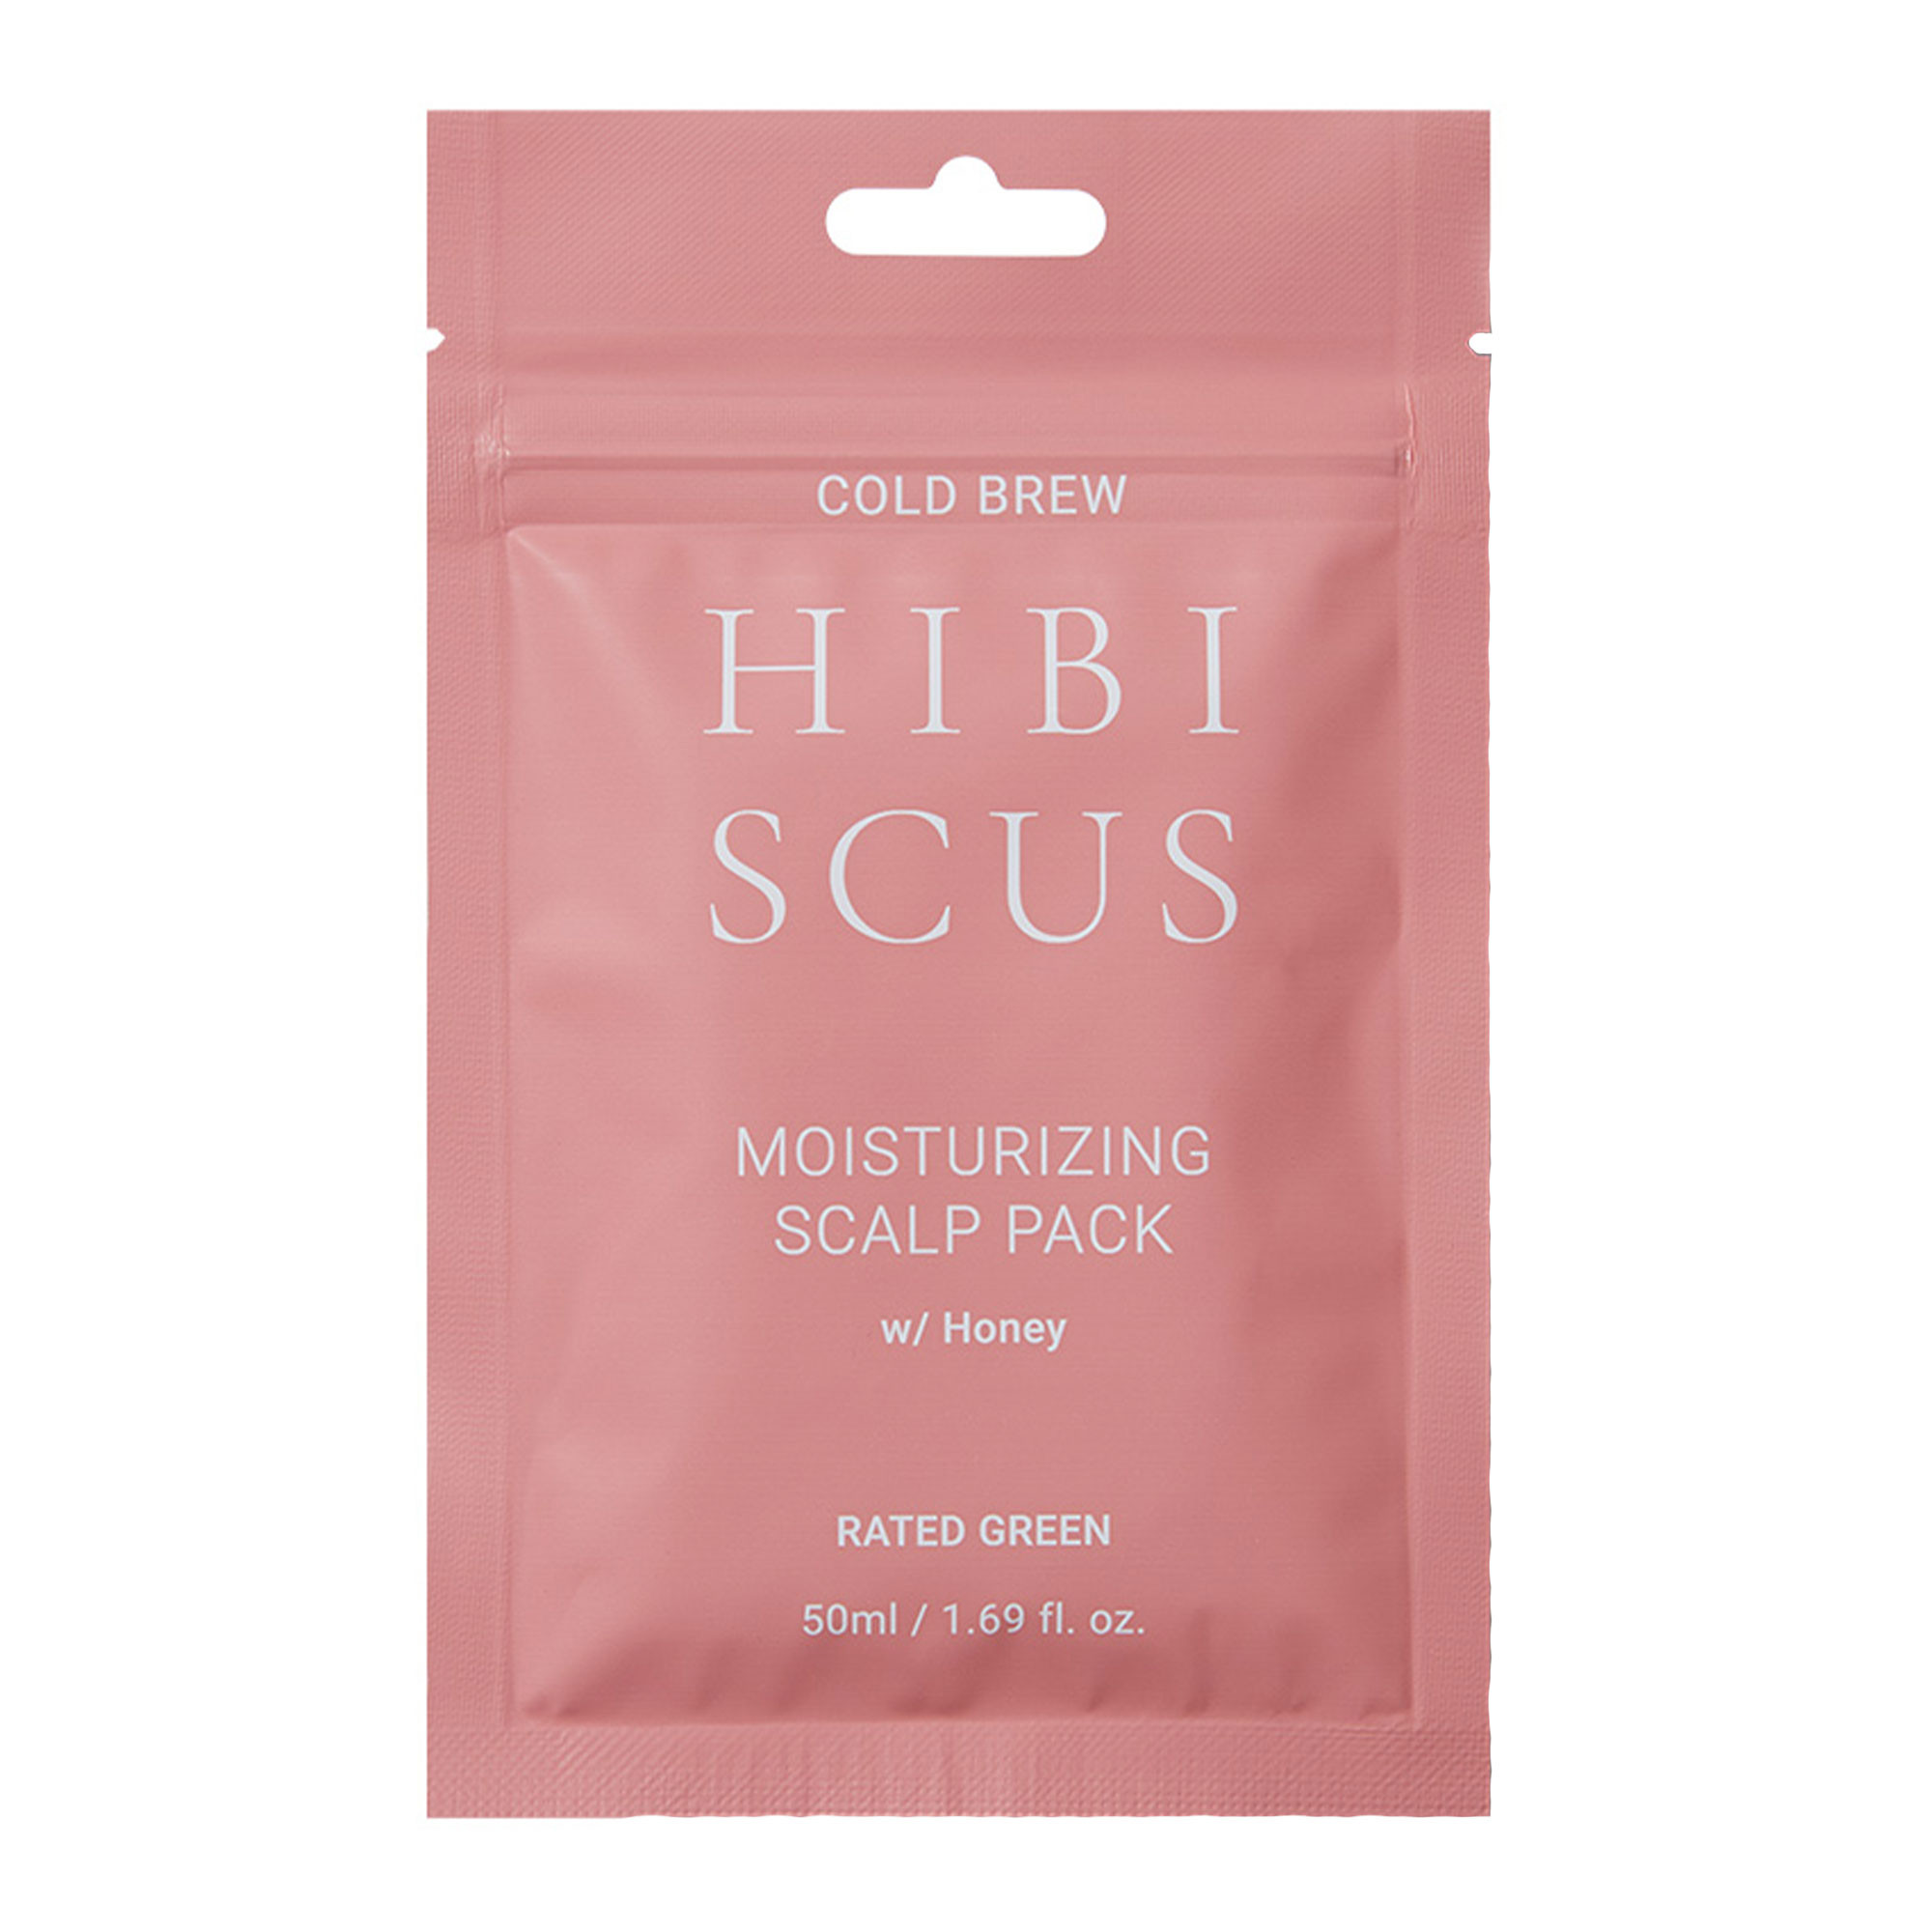 Rated Green Hibiscus Moisturizing Scalp Pack W/ Honey Увлажняющая маска с экстрактом гибискуса